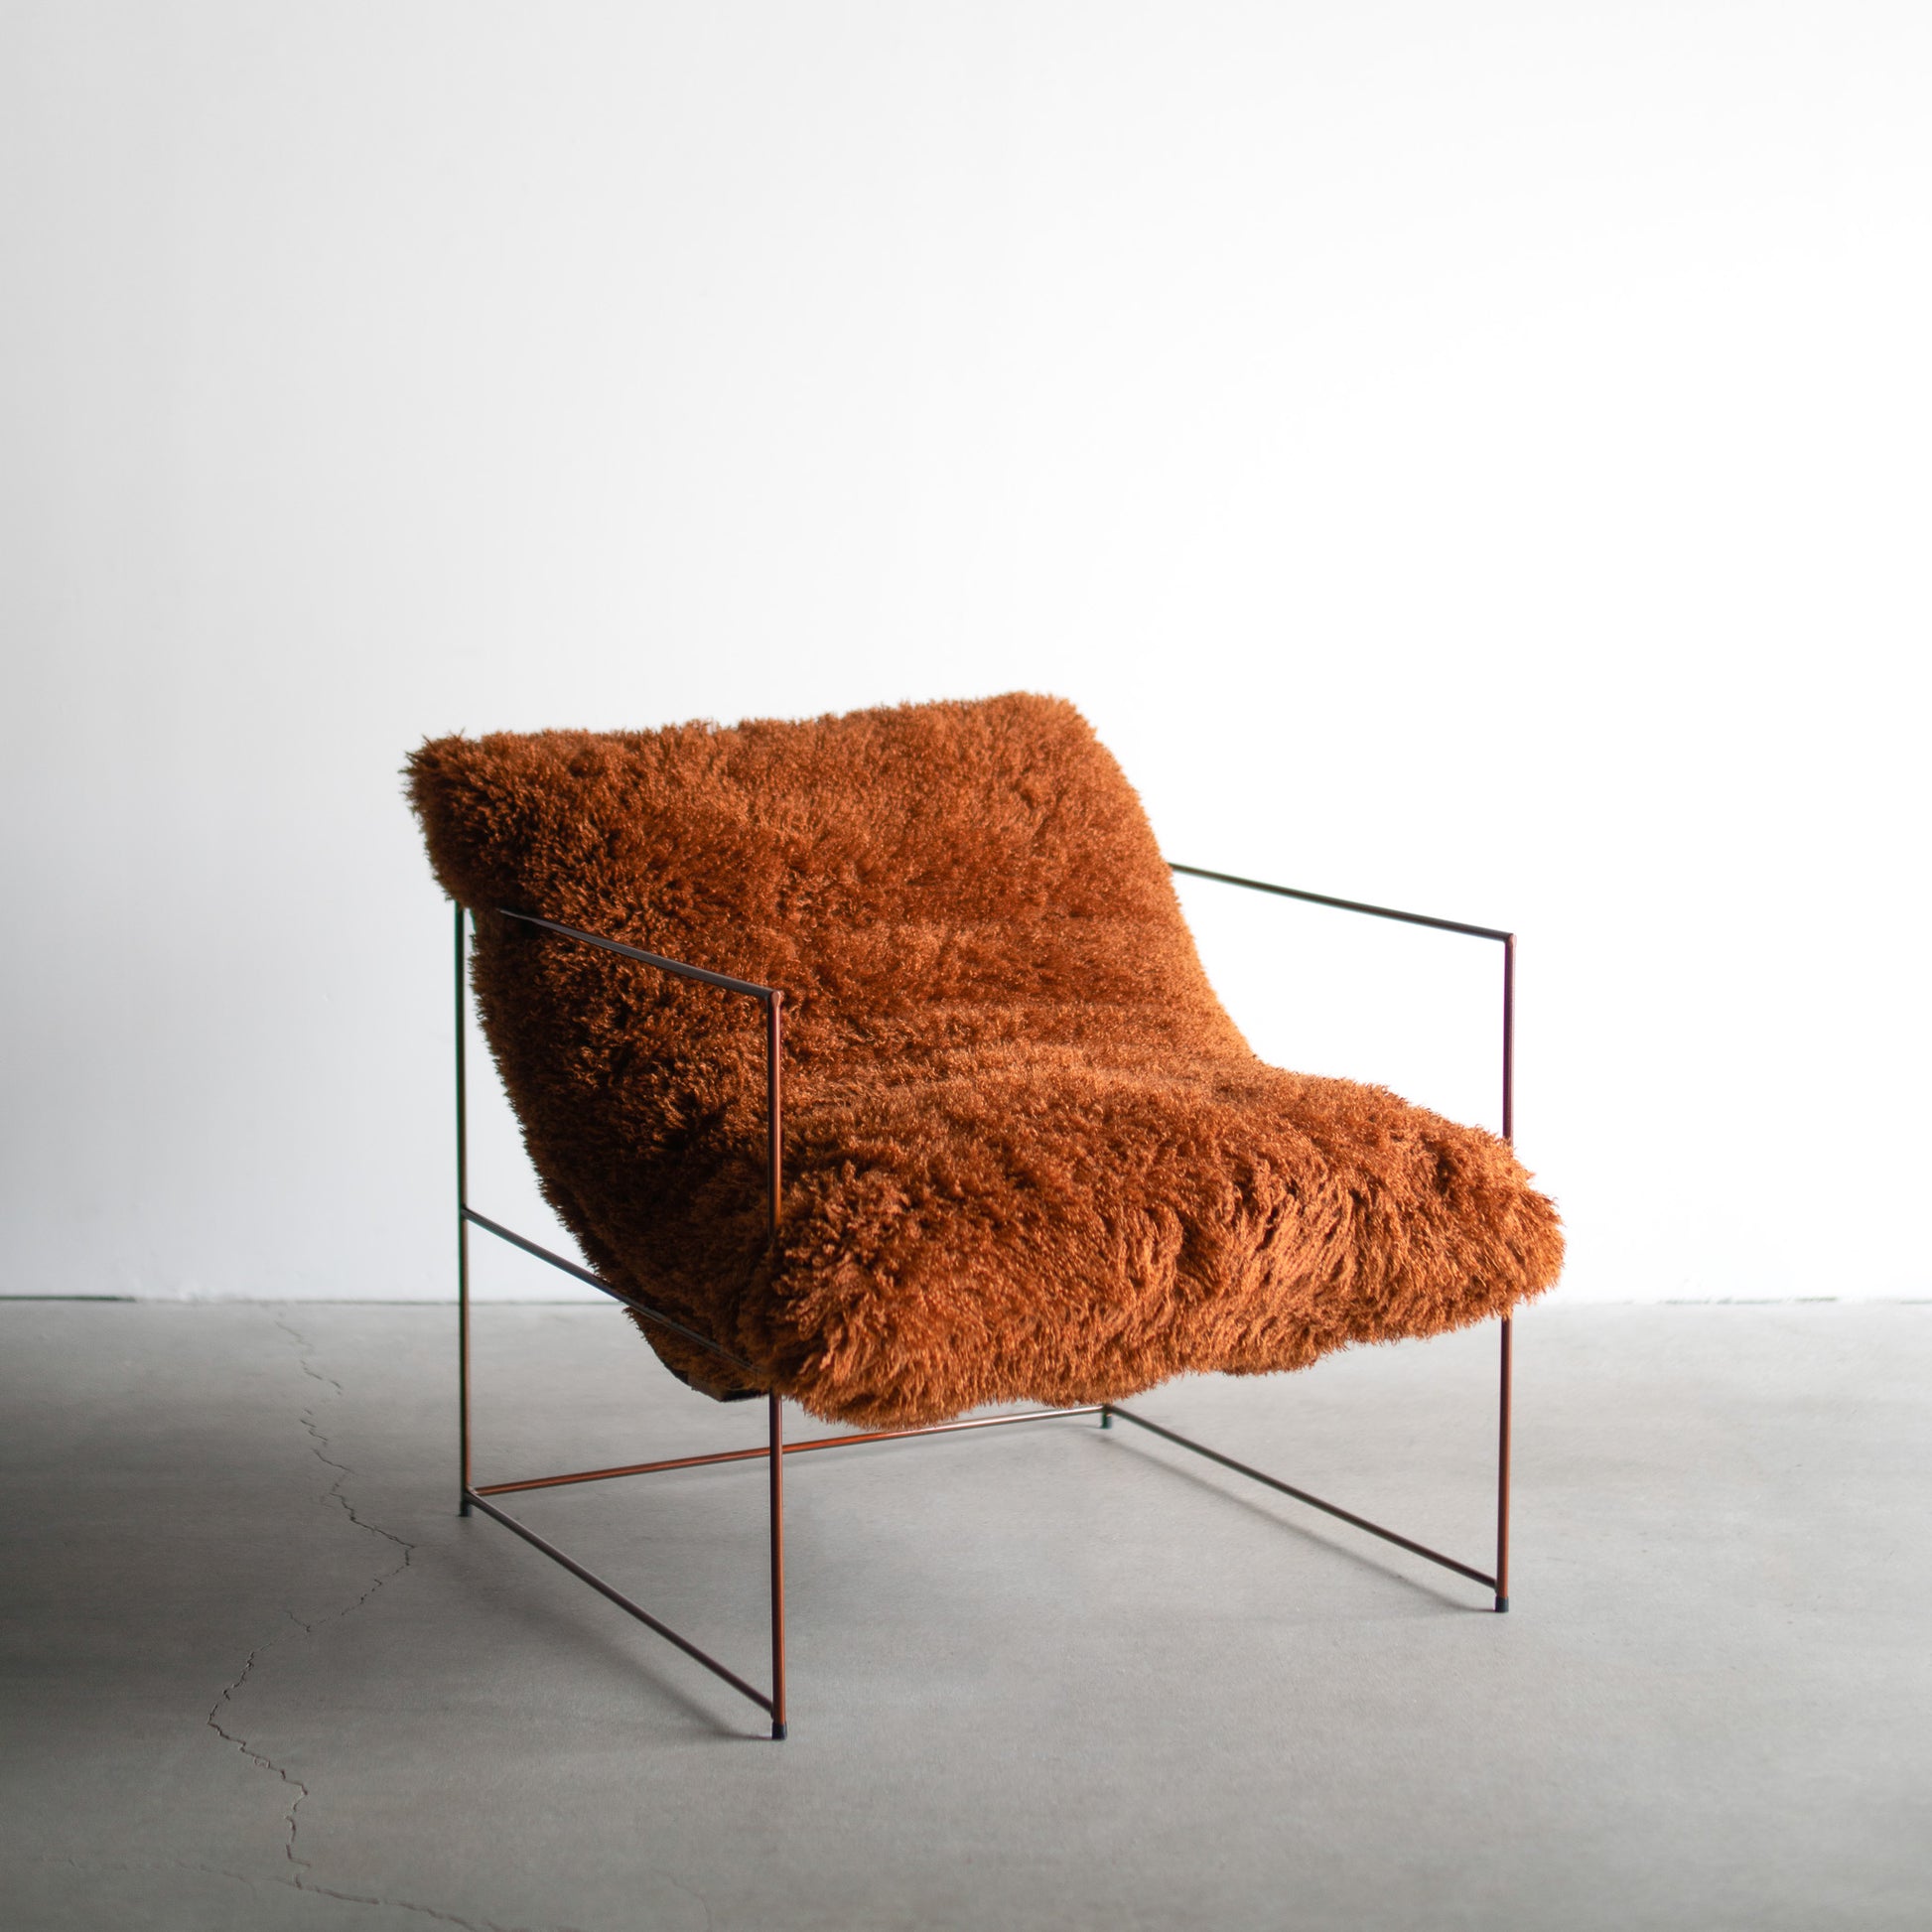 Sierra chair x faith blakeney- steel frame with chair cushion